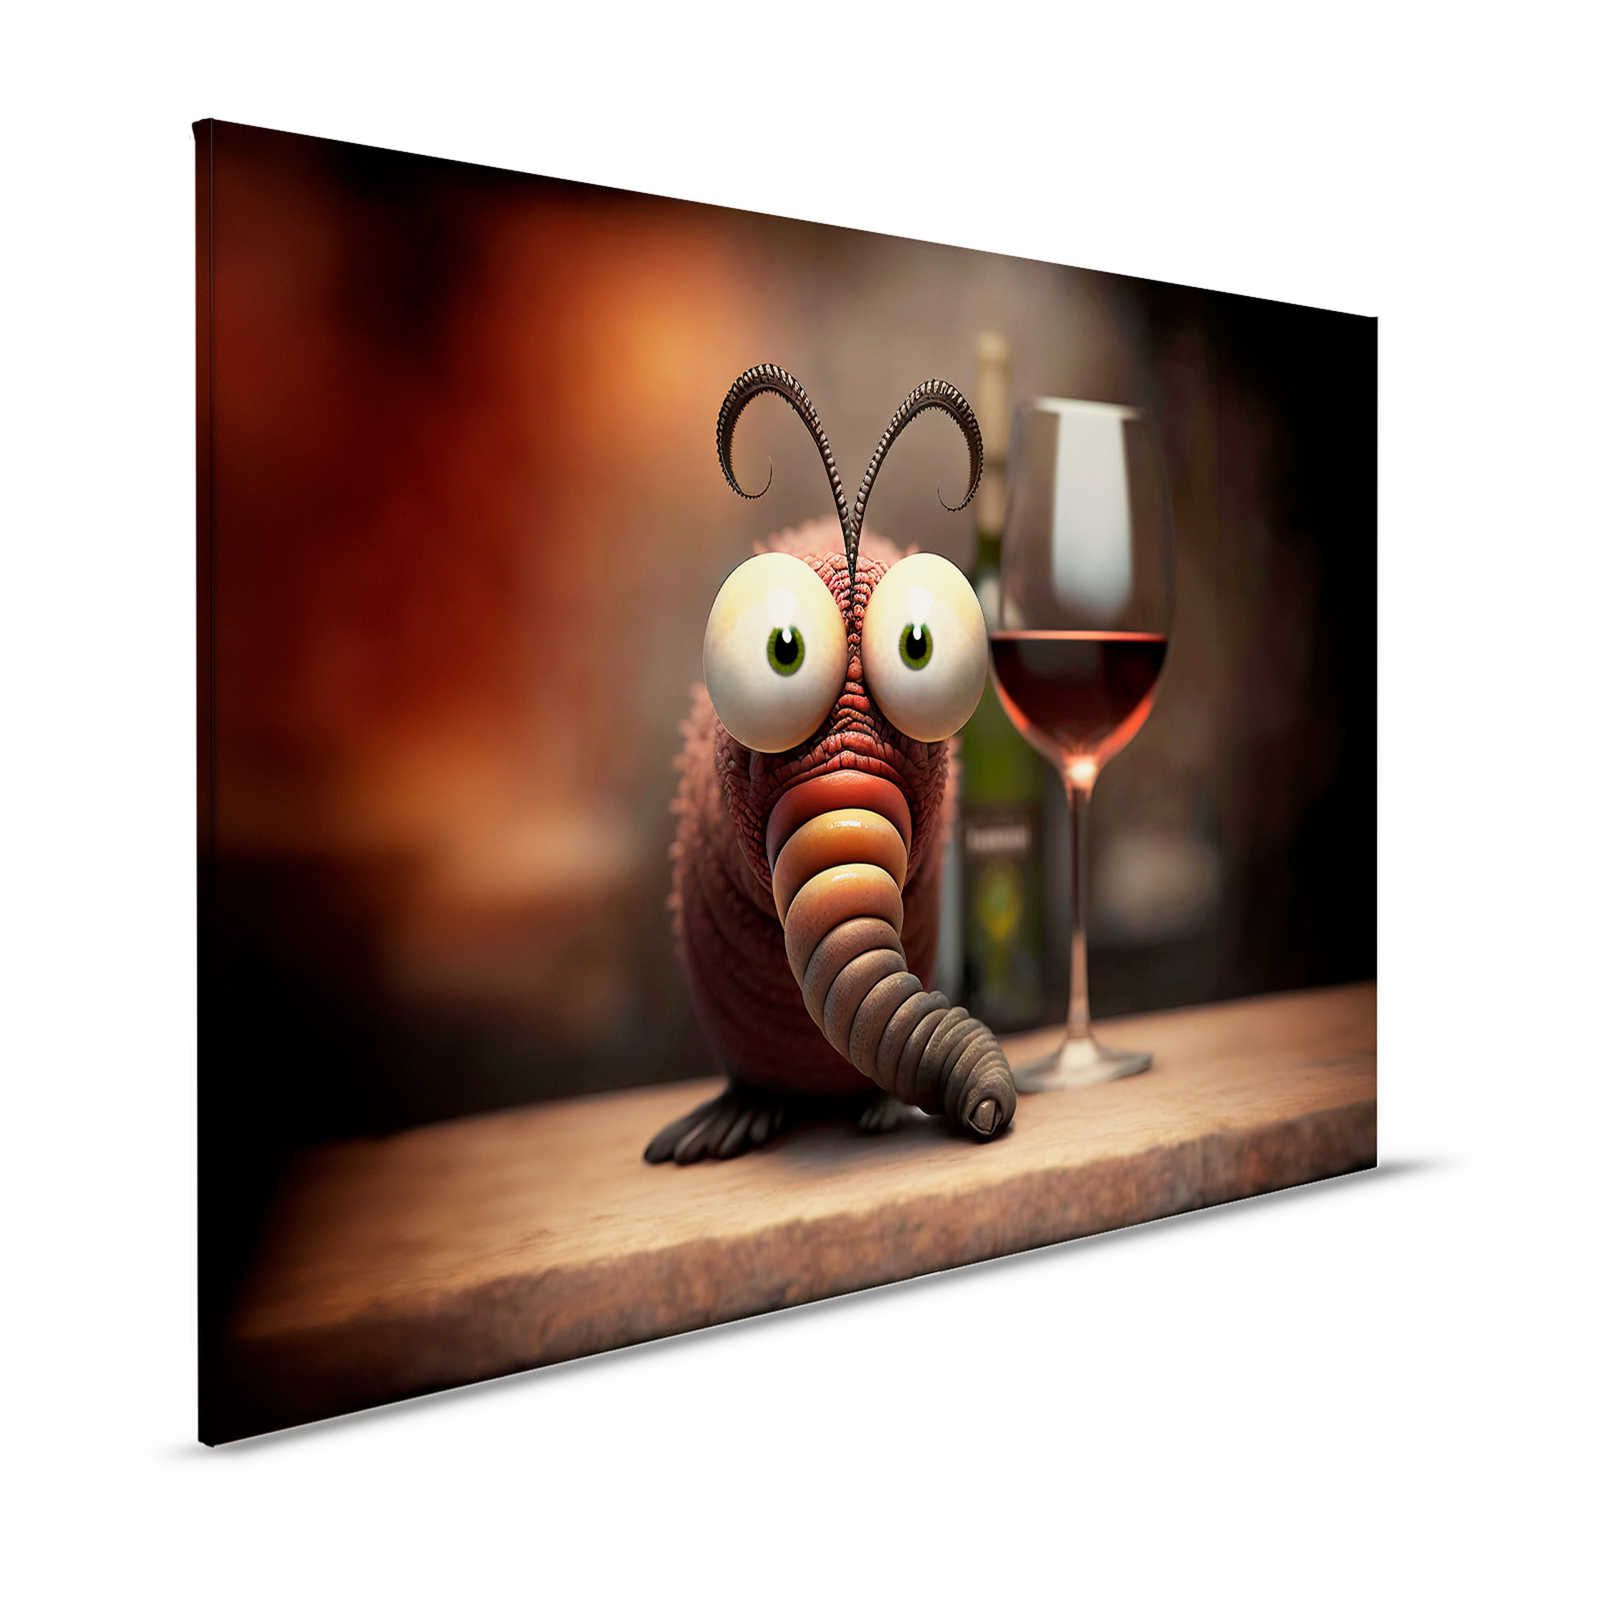 KI Canvas painting »winy worm« - 120 cm x 80 cm
